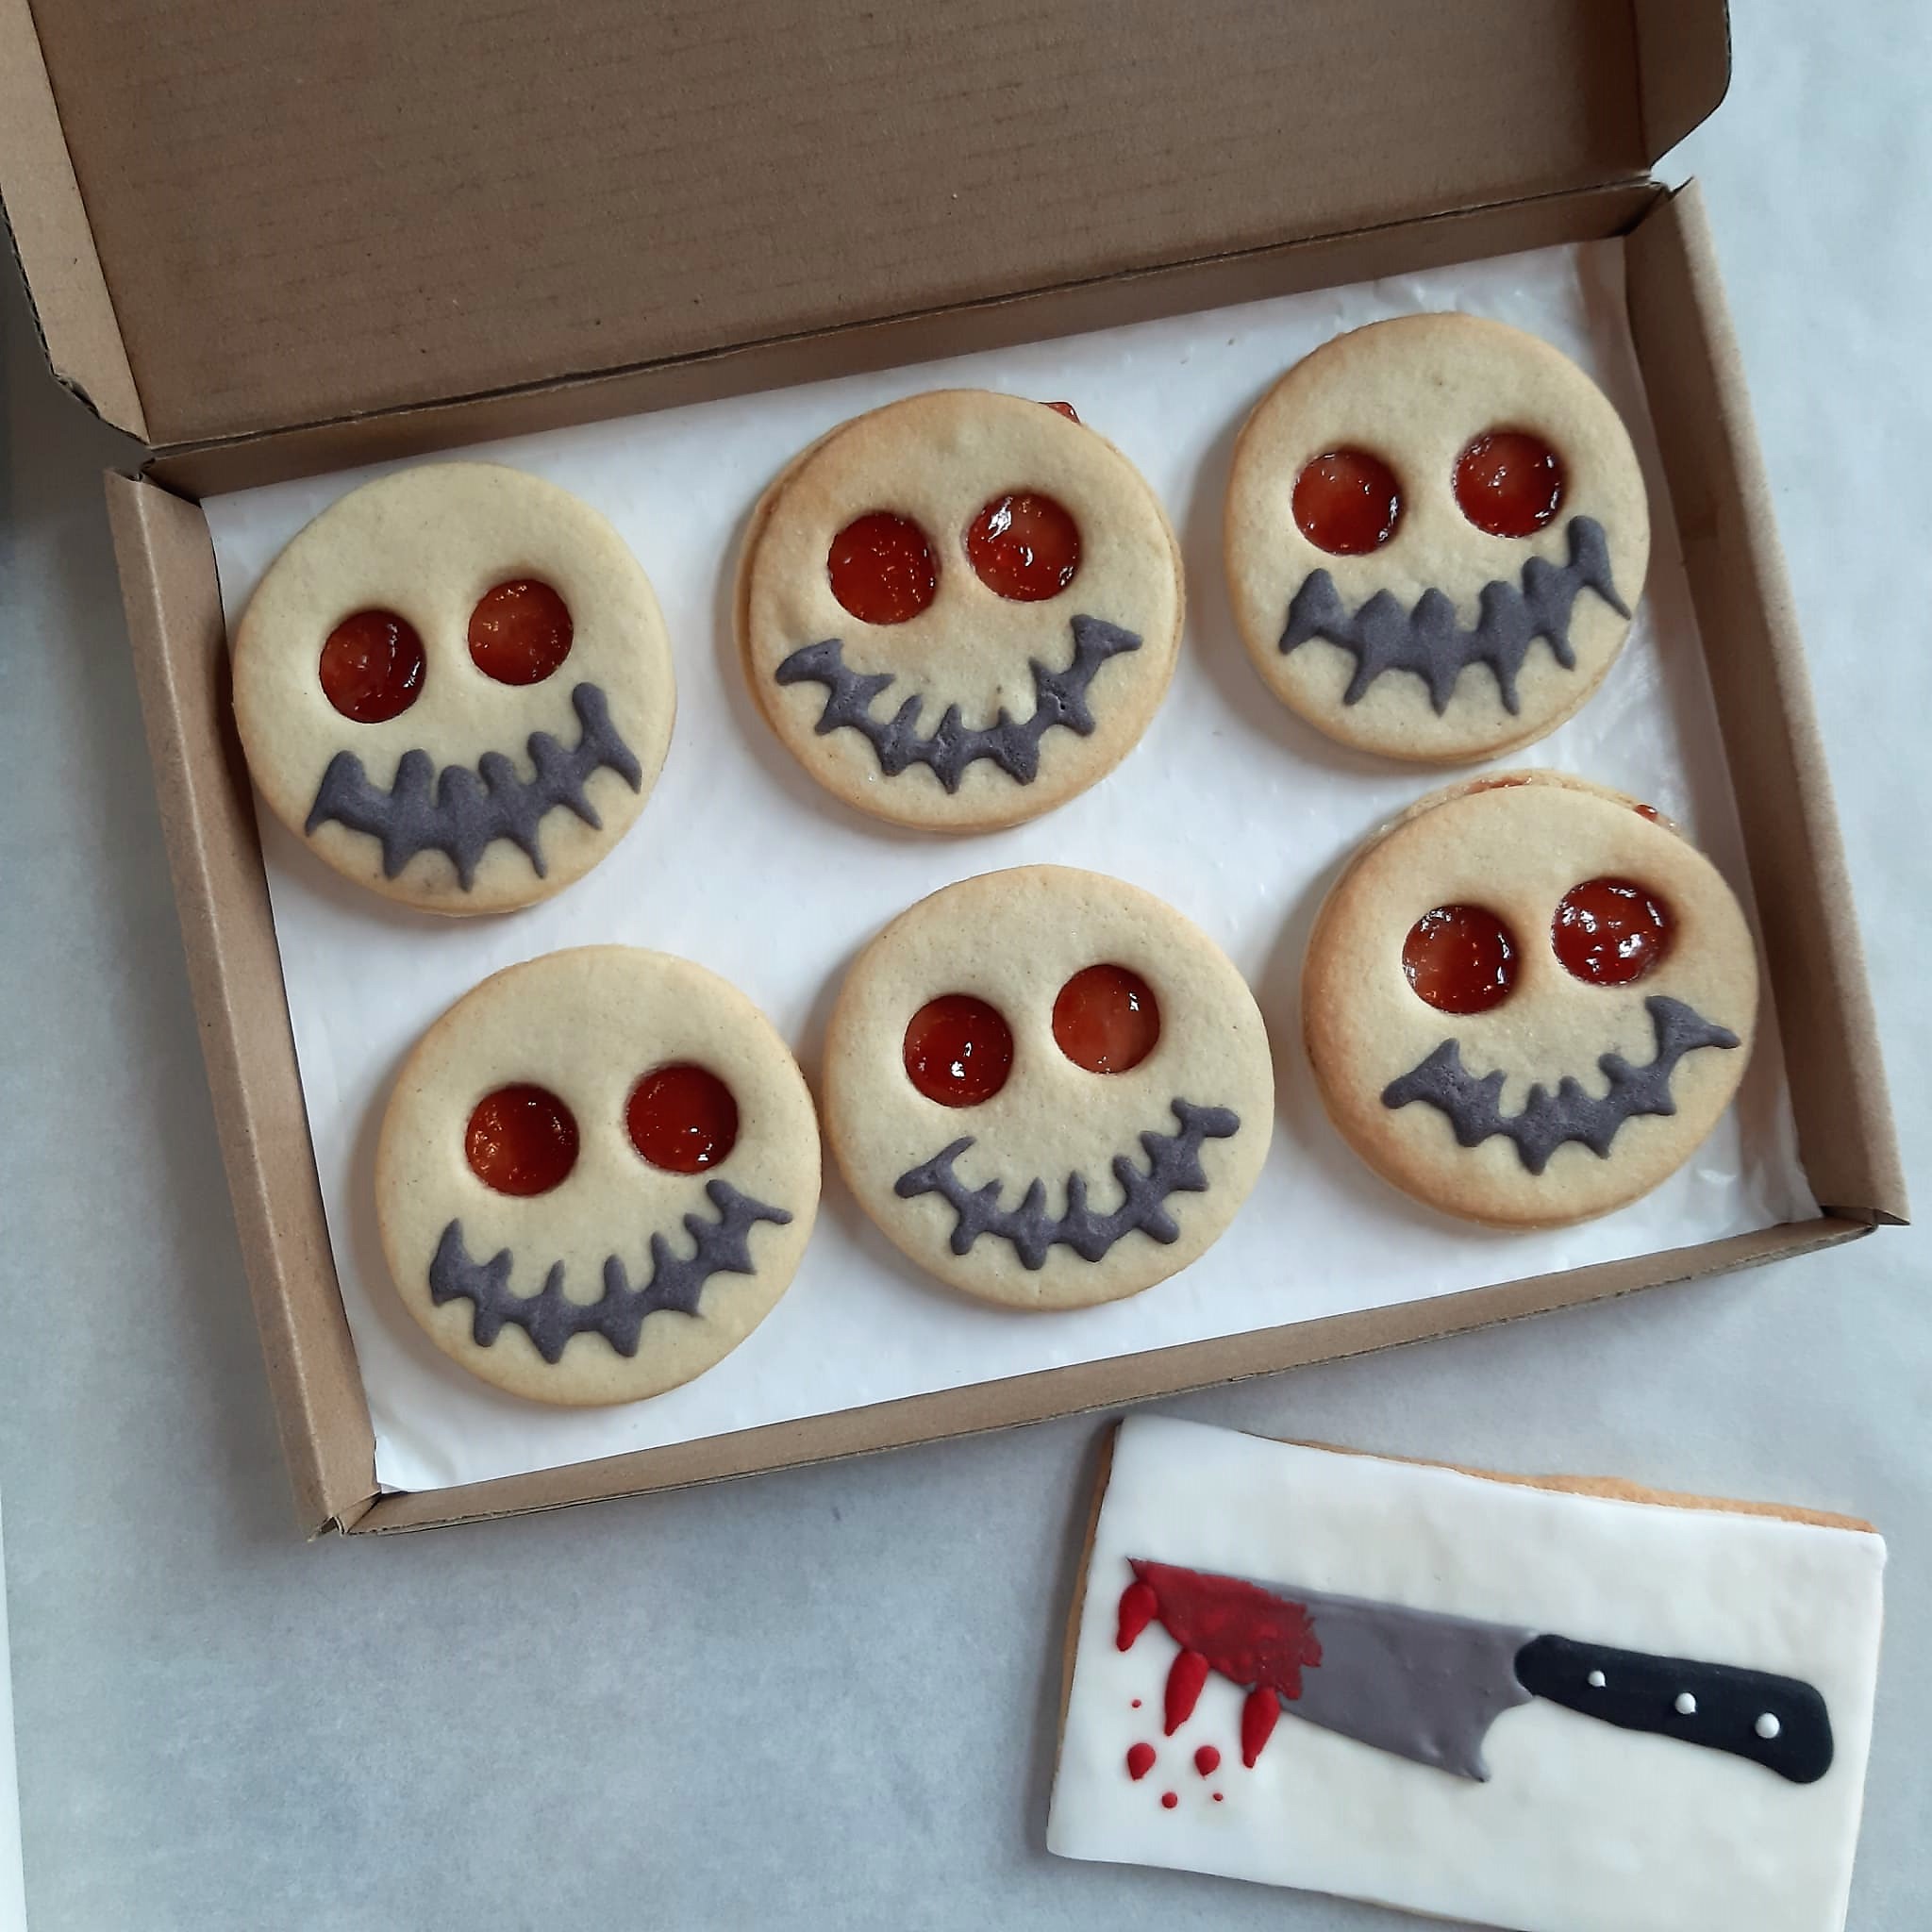 Zombie biscuits for Halloween